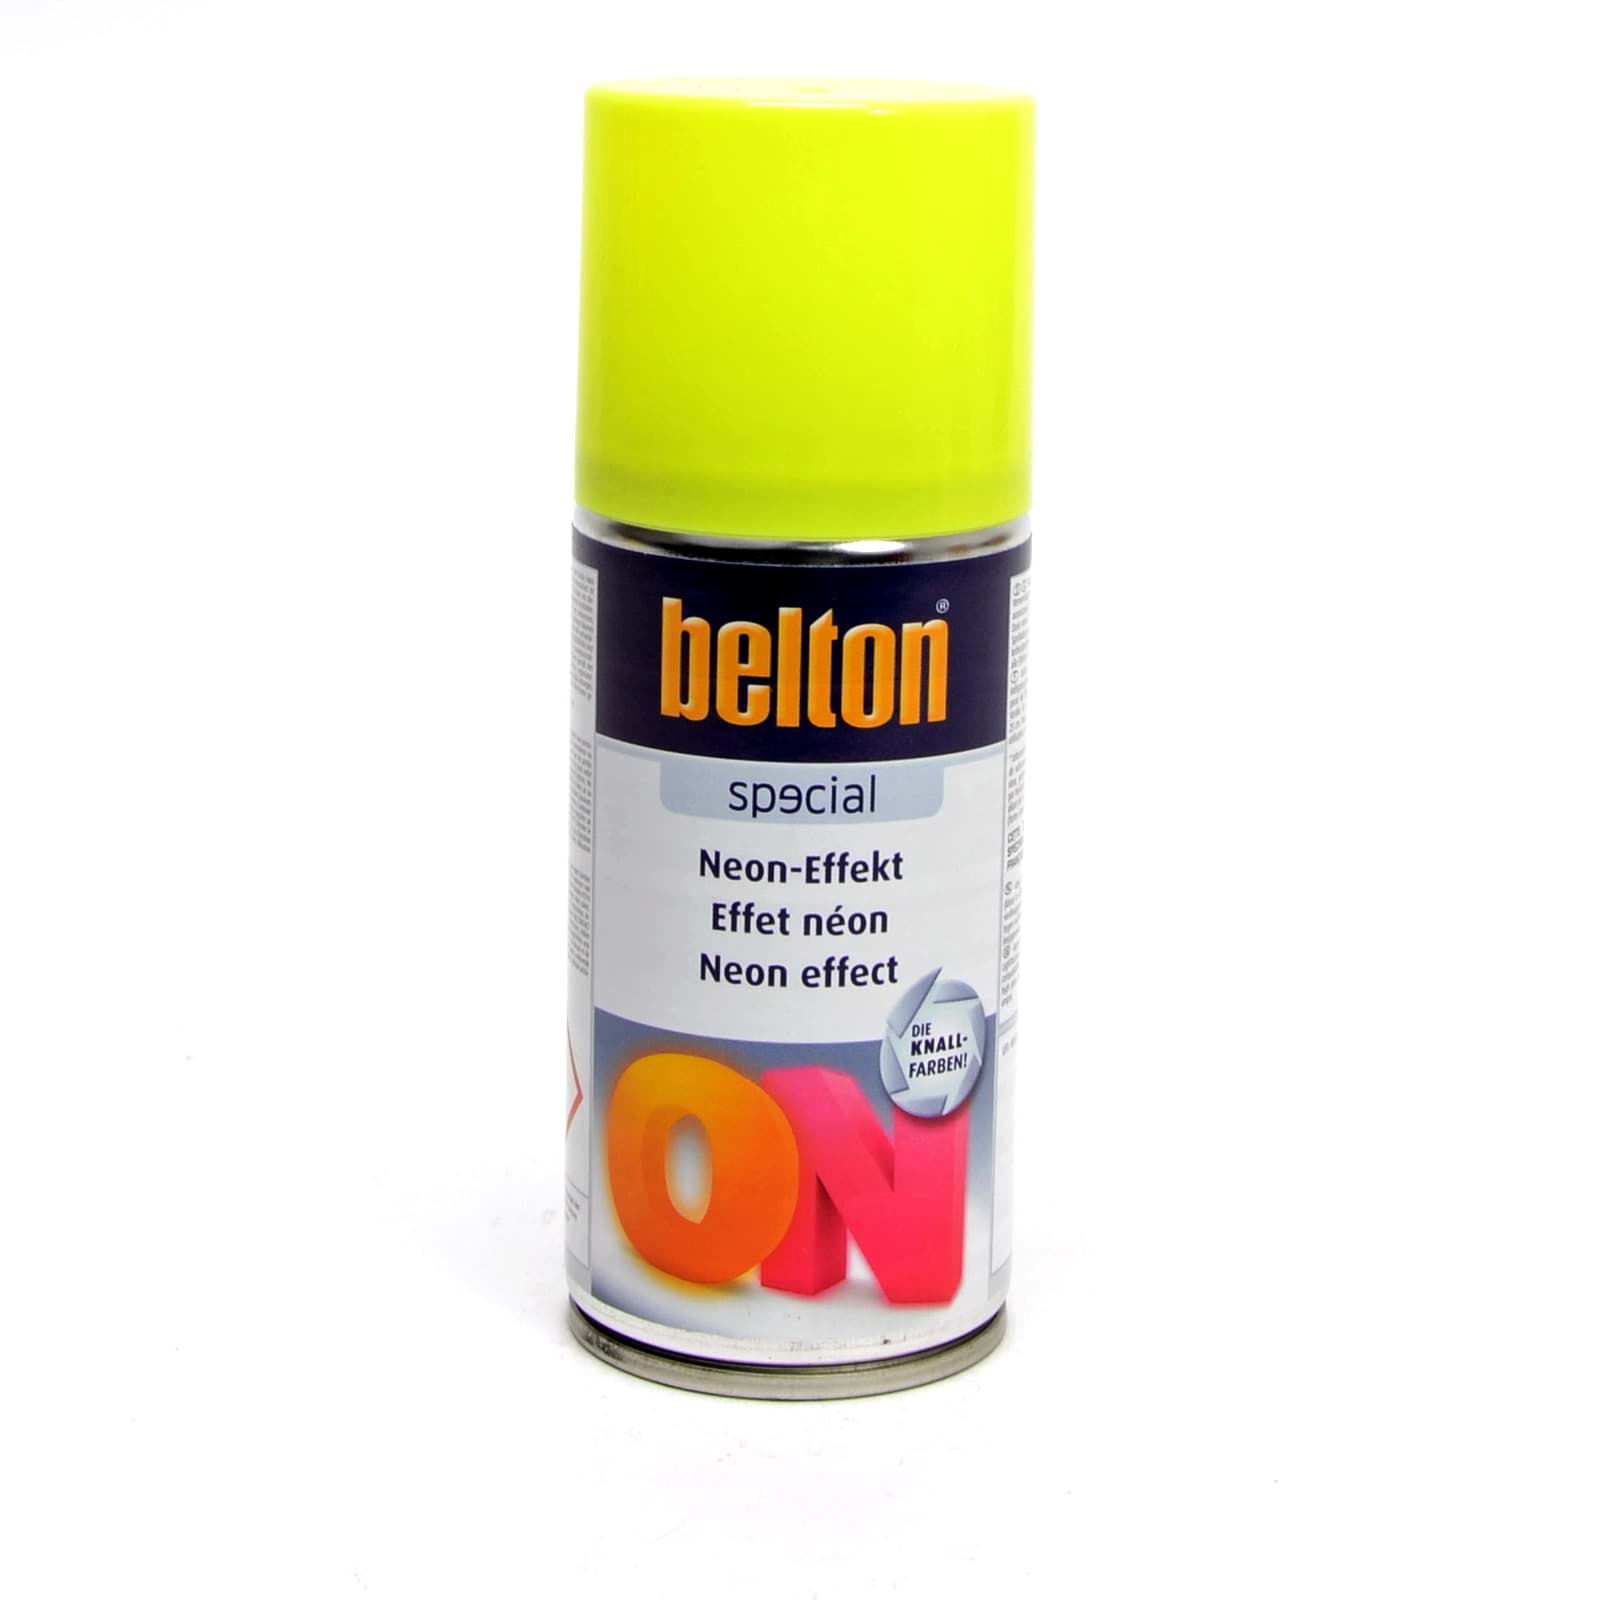 Belton SPECIAL NEON-EFFEKT Gelb 150ml resmi